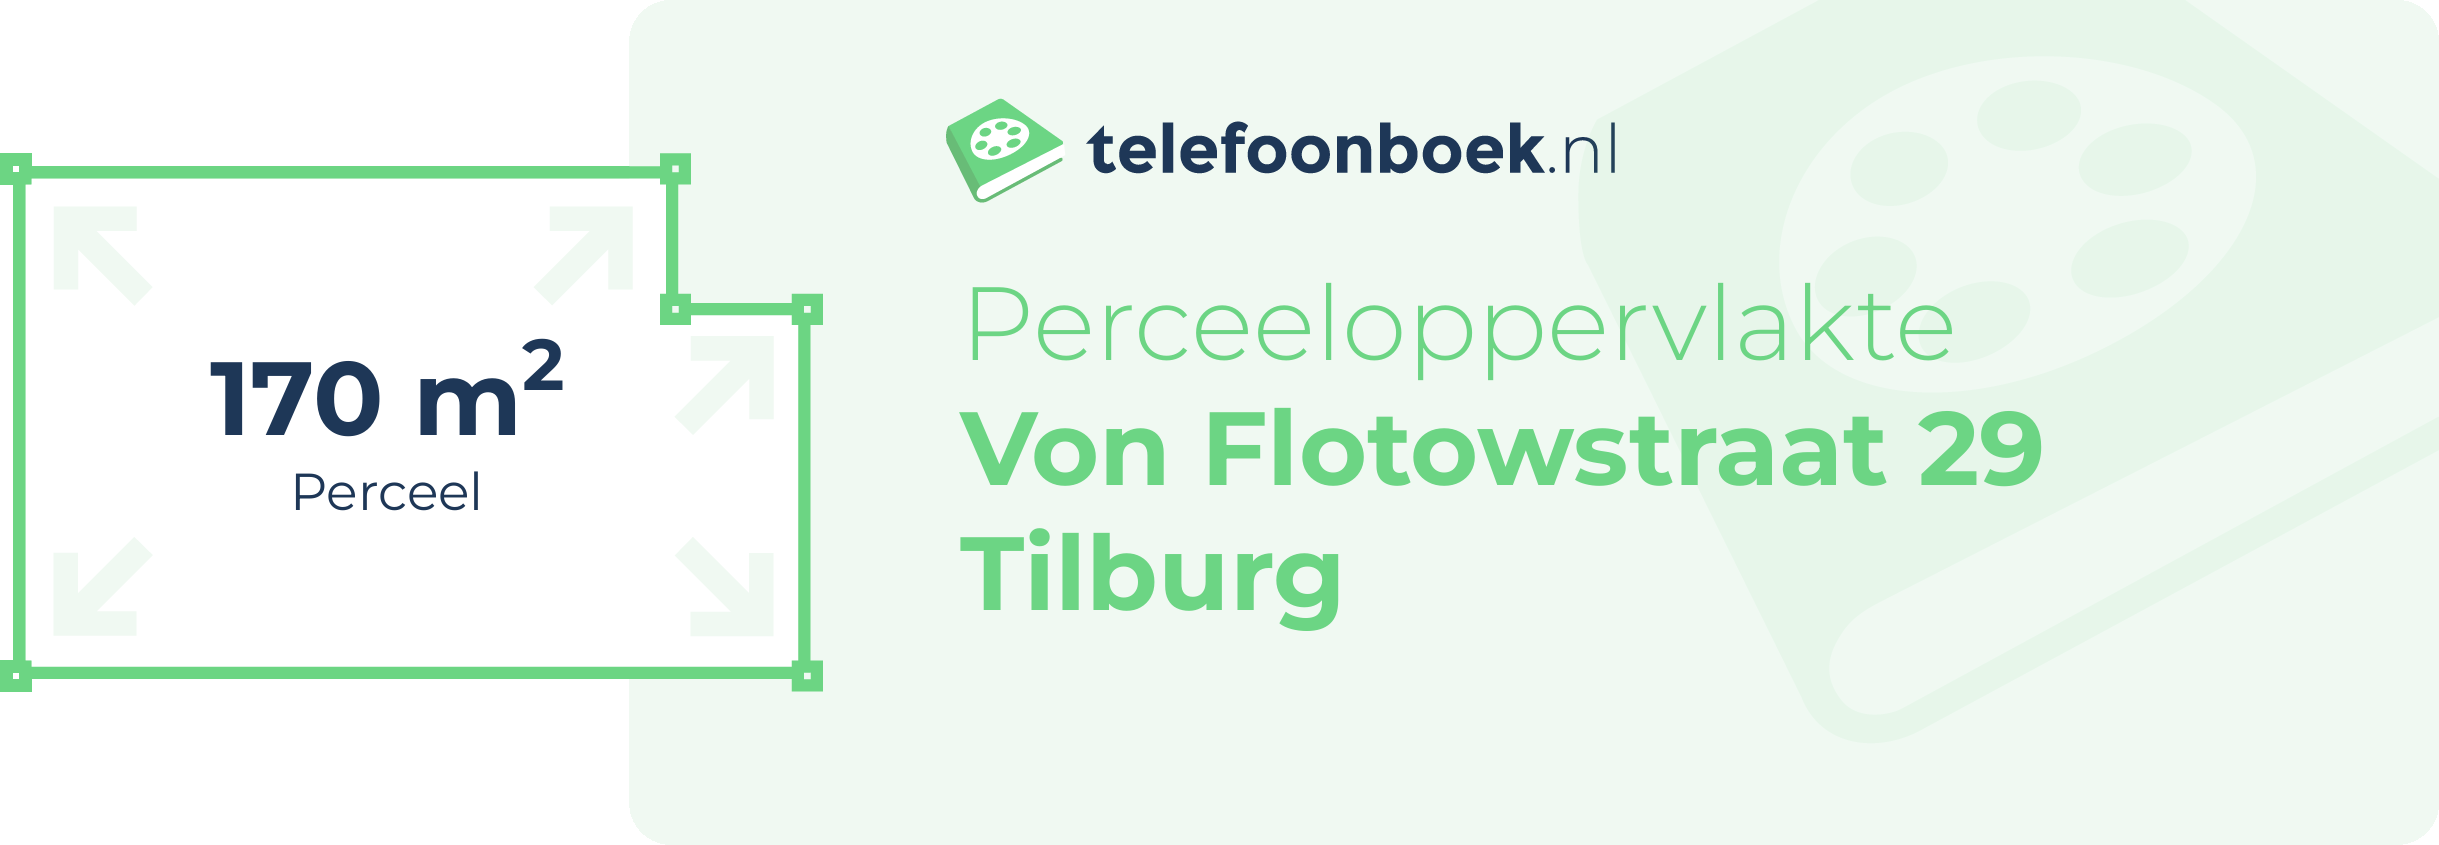 Perceeloppervlakte Von Flotowstraat 29 Tilburg